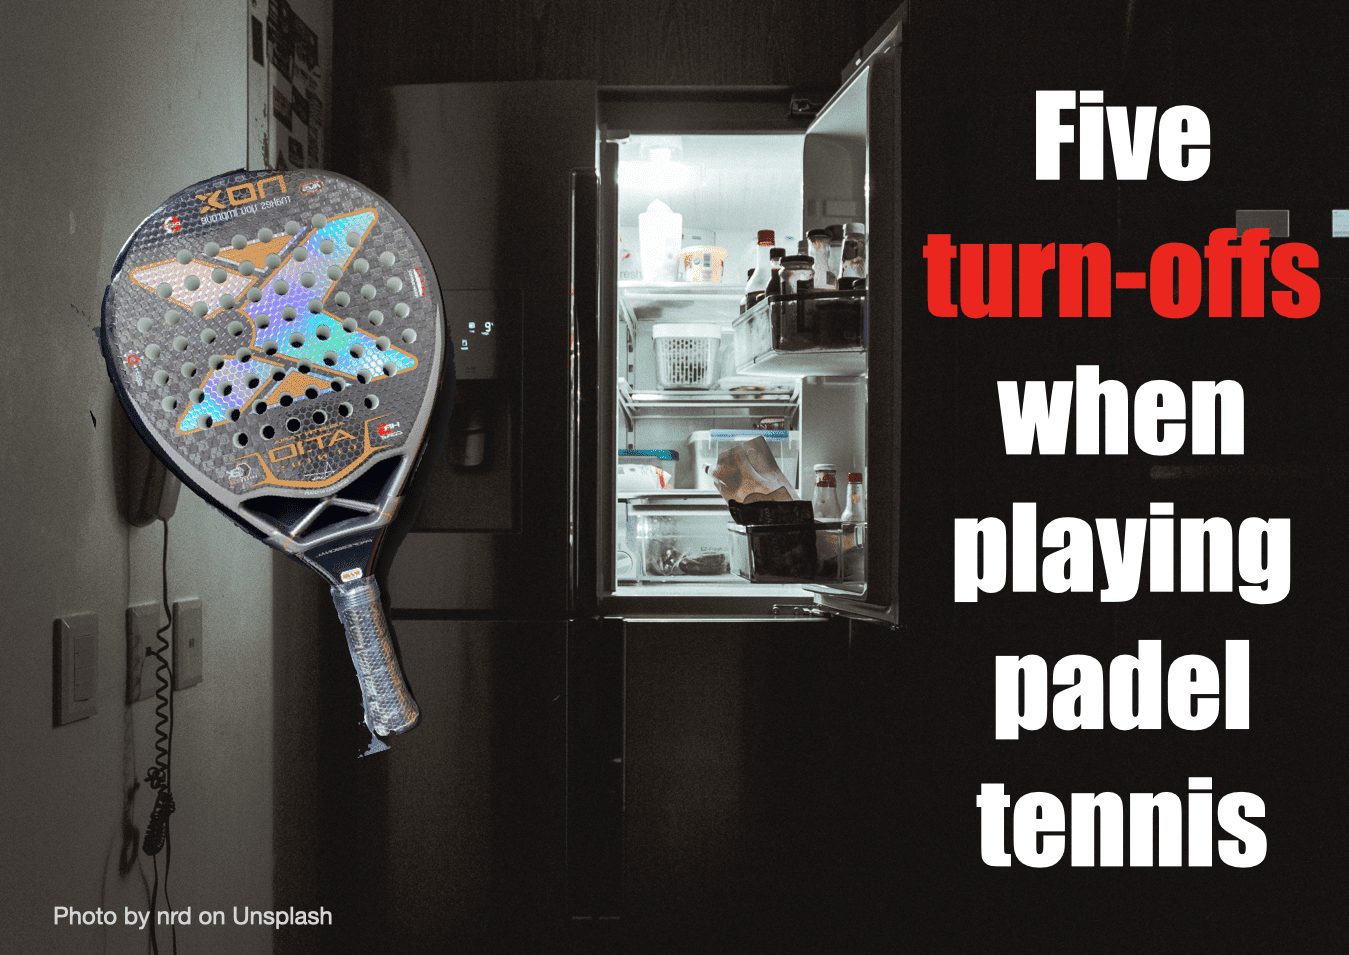 Five biggest turn-offs of padel tennis